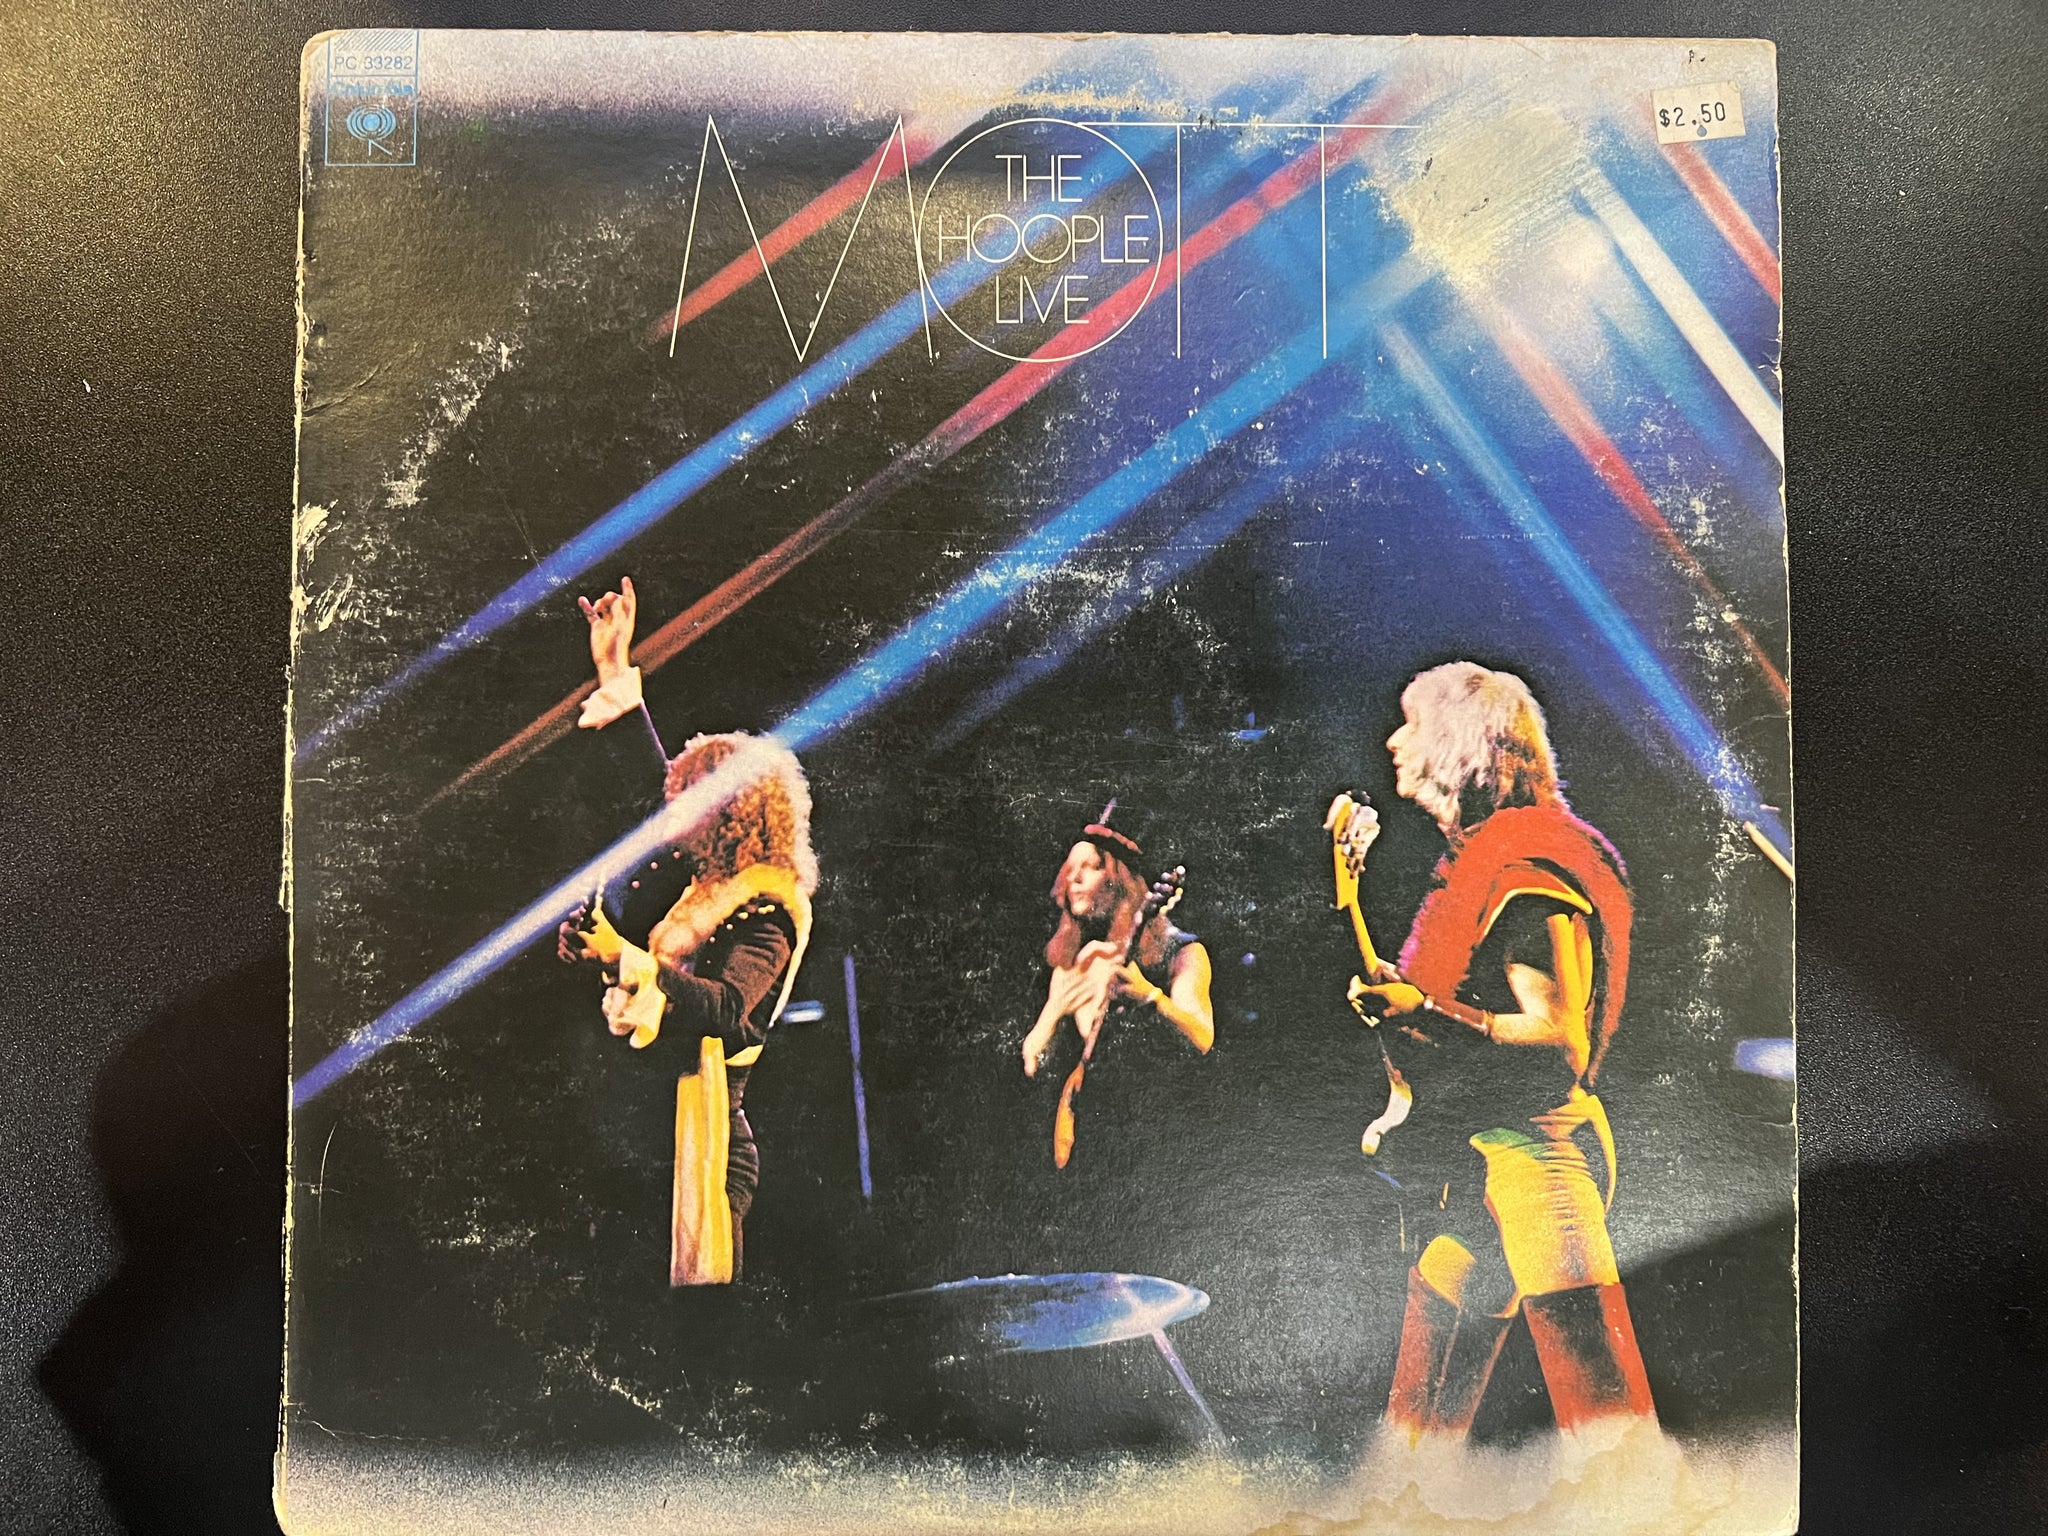 Mott The Hoople – Mott The Hoople Live - VG+ LP Record 1974 Columbia USA Vinyl - Rock / Glam